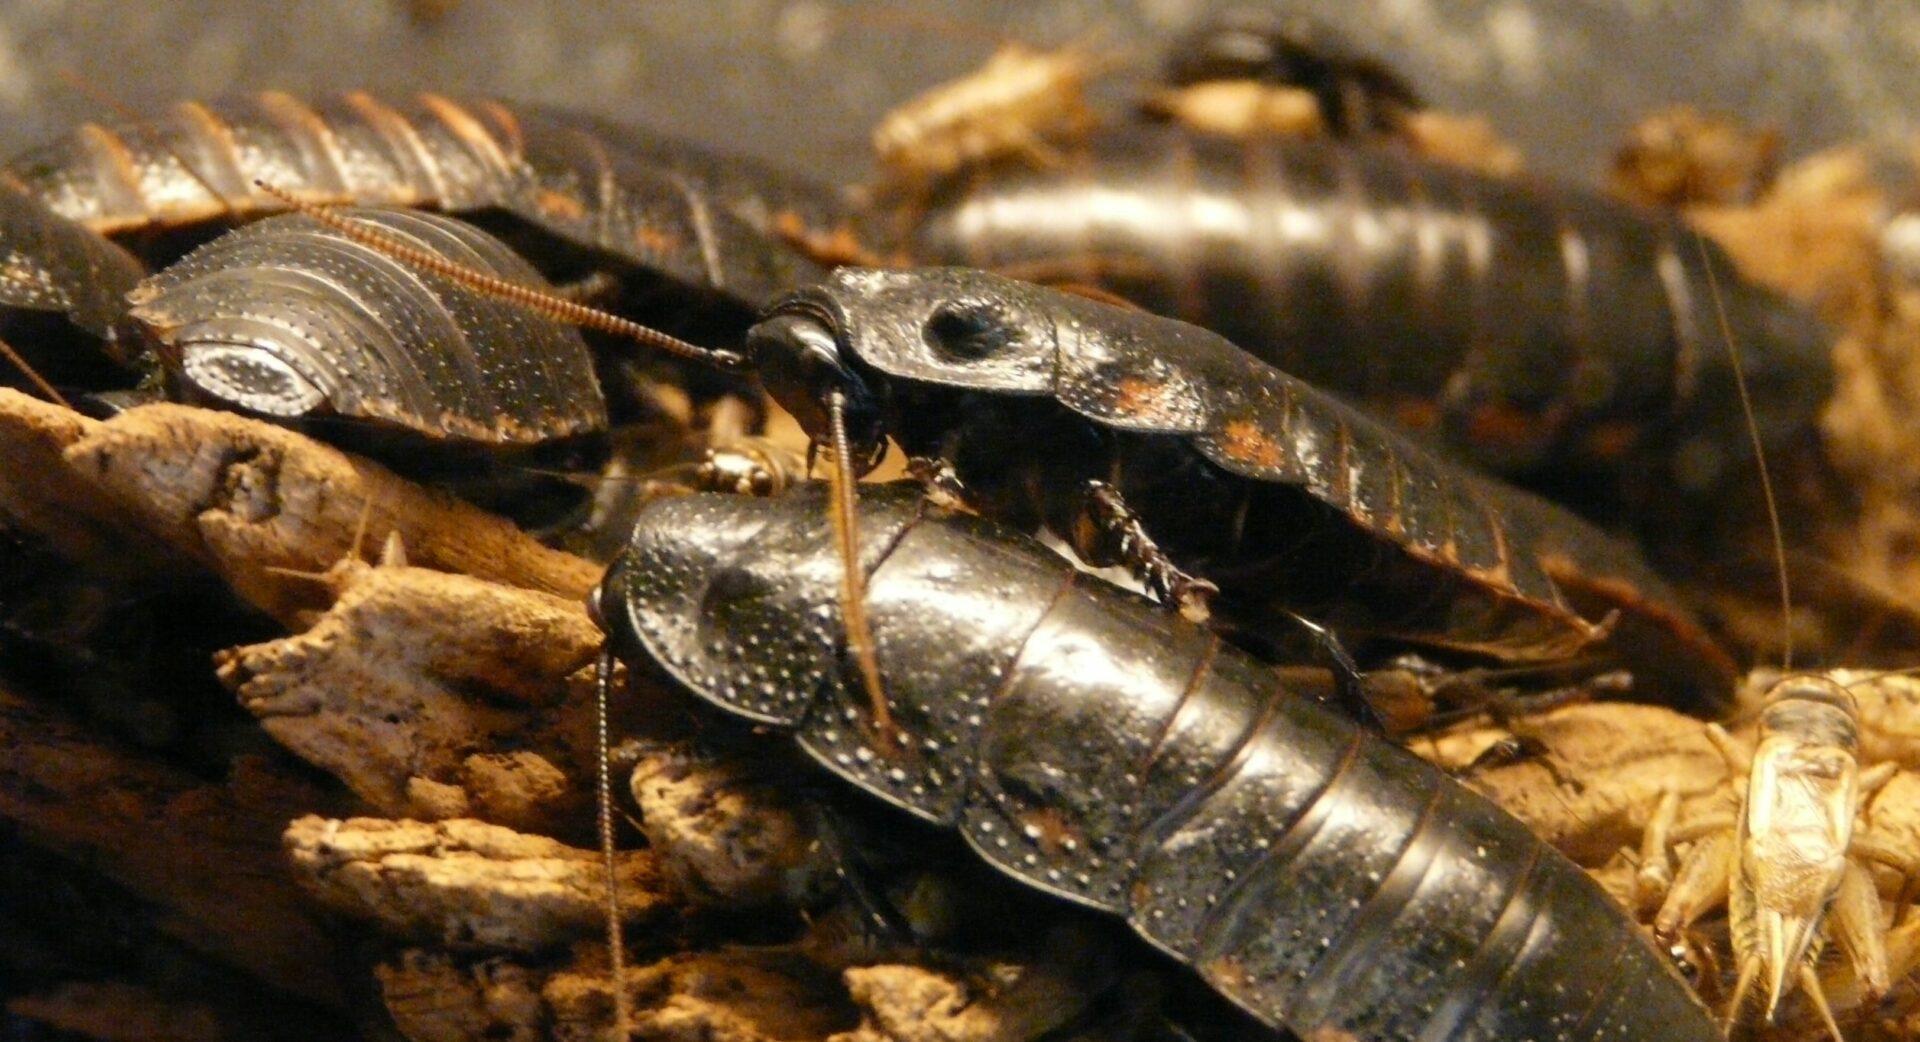 Food insect seafood fauna invertebrate close up